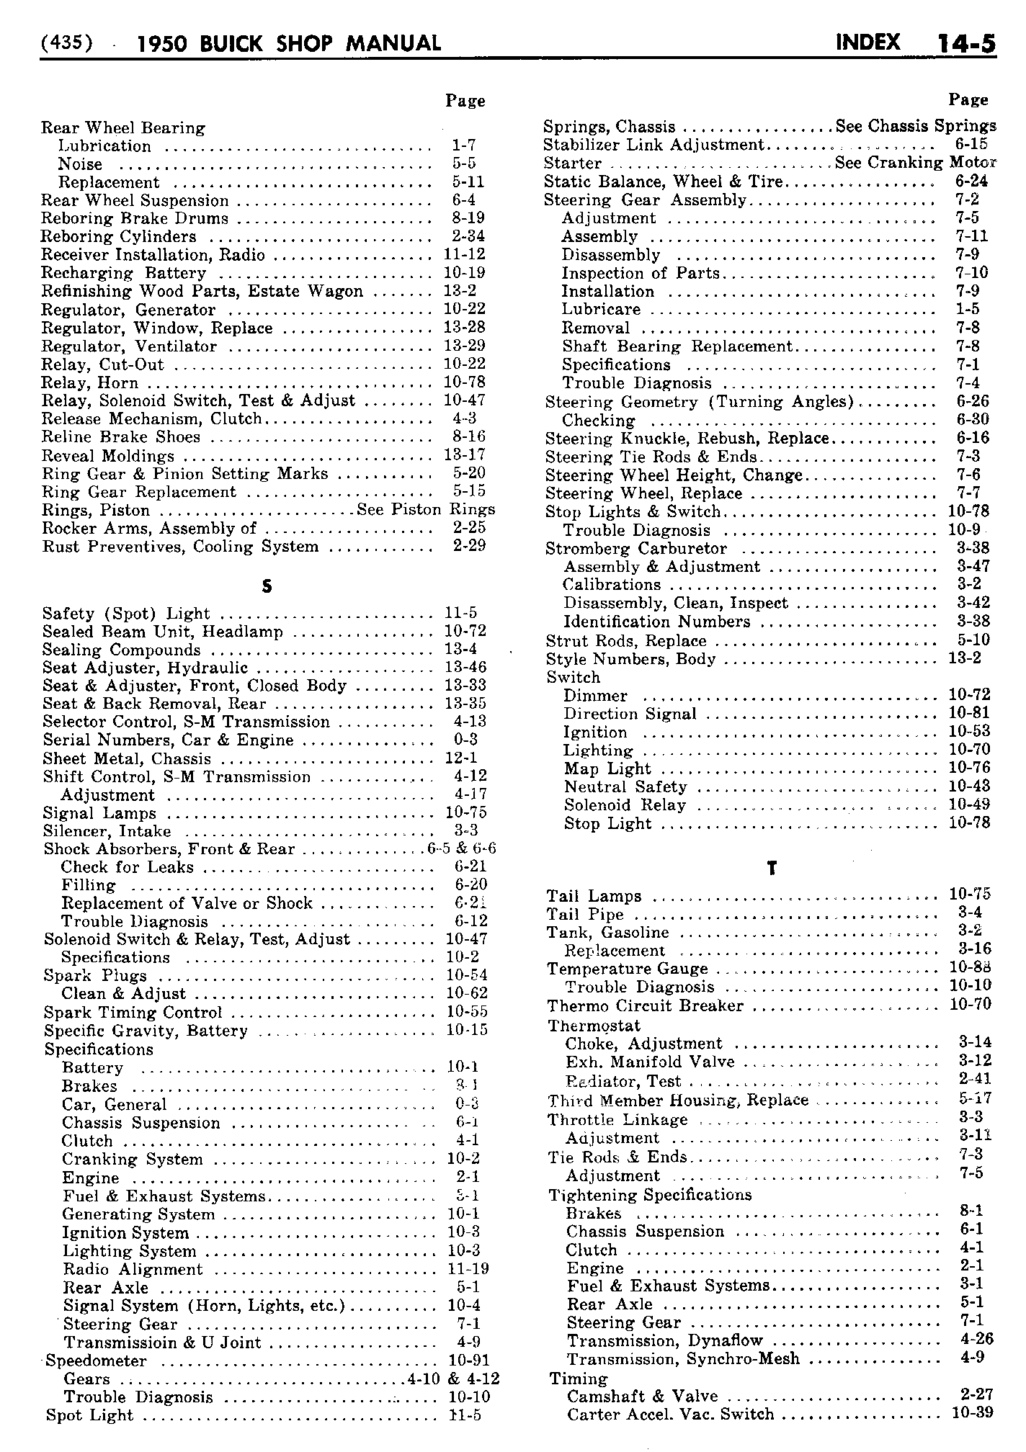 n_15 1950 Buick Shop Manual - Index-005-005.jpg